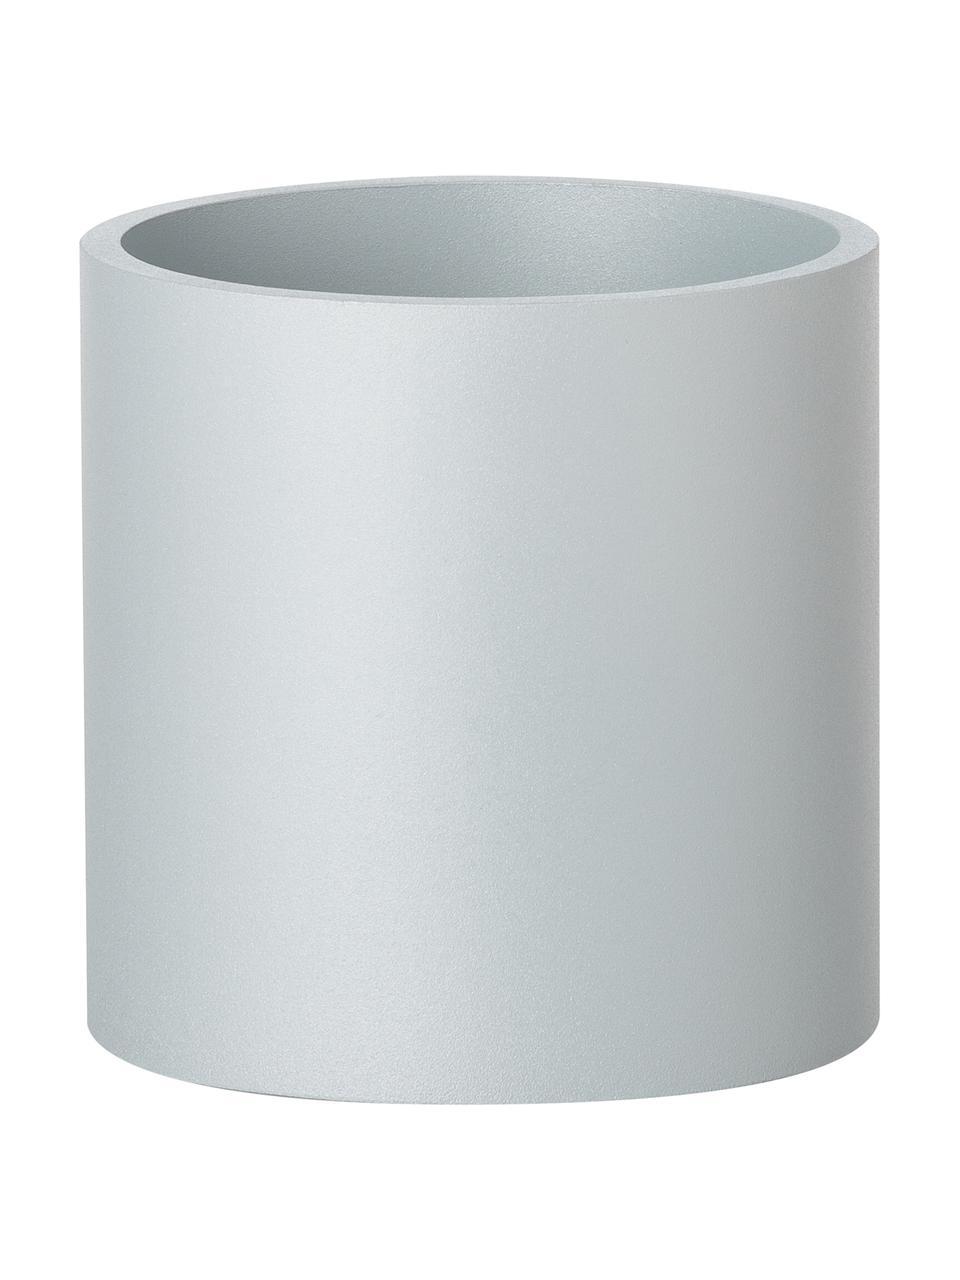 Kleine Wandleuchte Roda in Grau, Lampenschirm: Aluminium, pulverbeschich, Grau, 10 x 10 cm